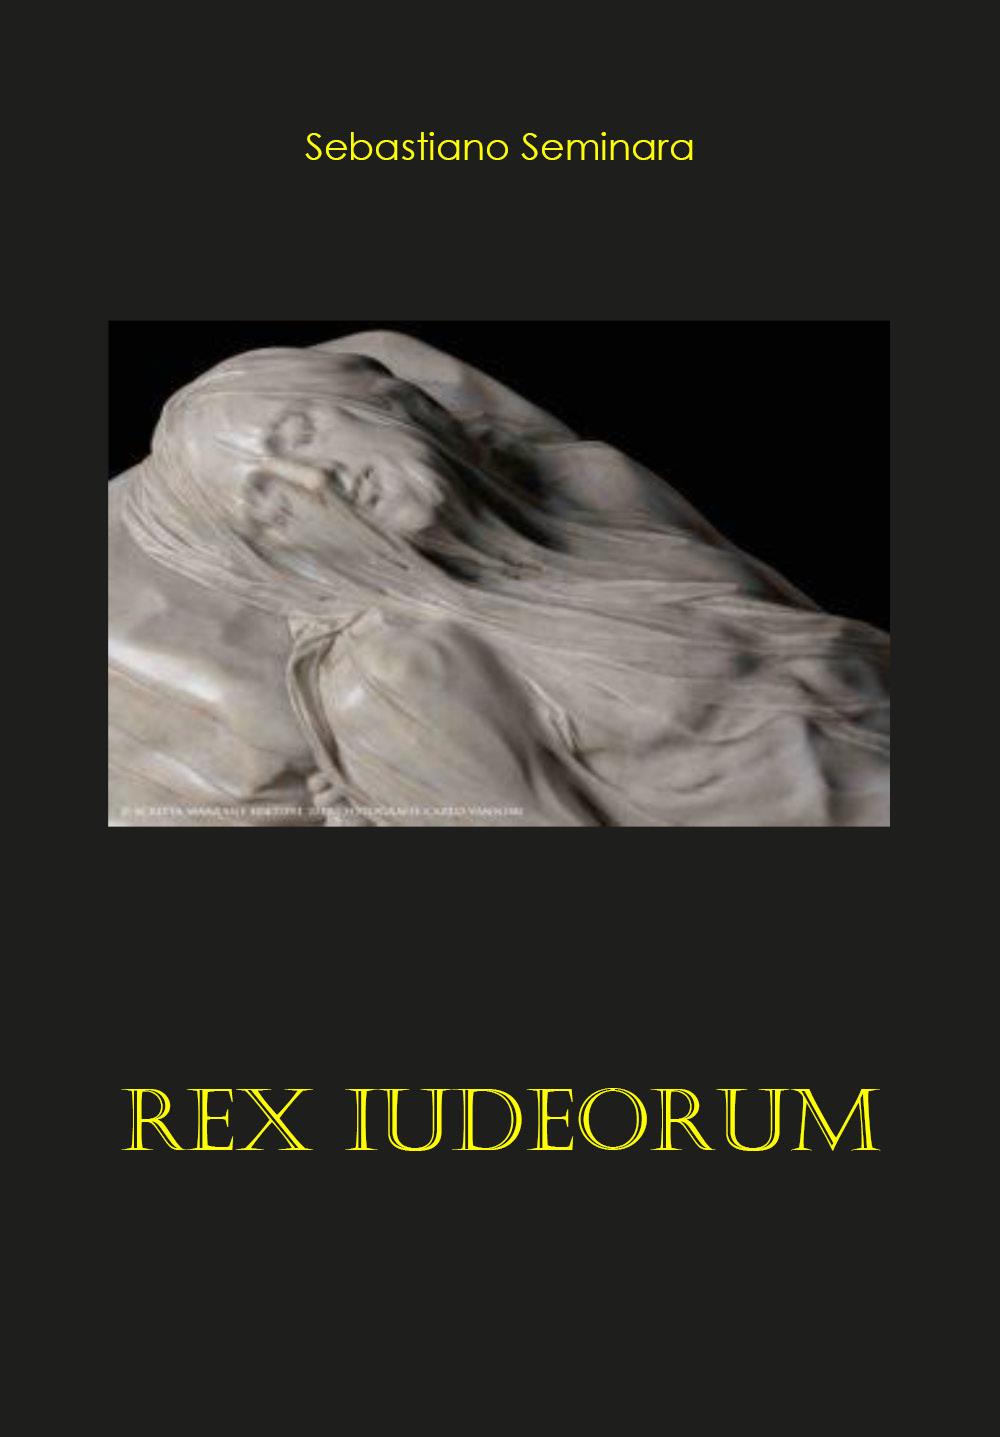 Rex Iudeorum